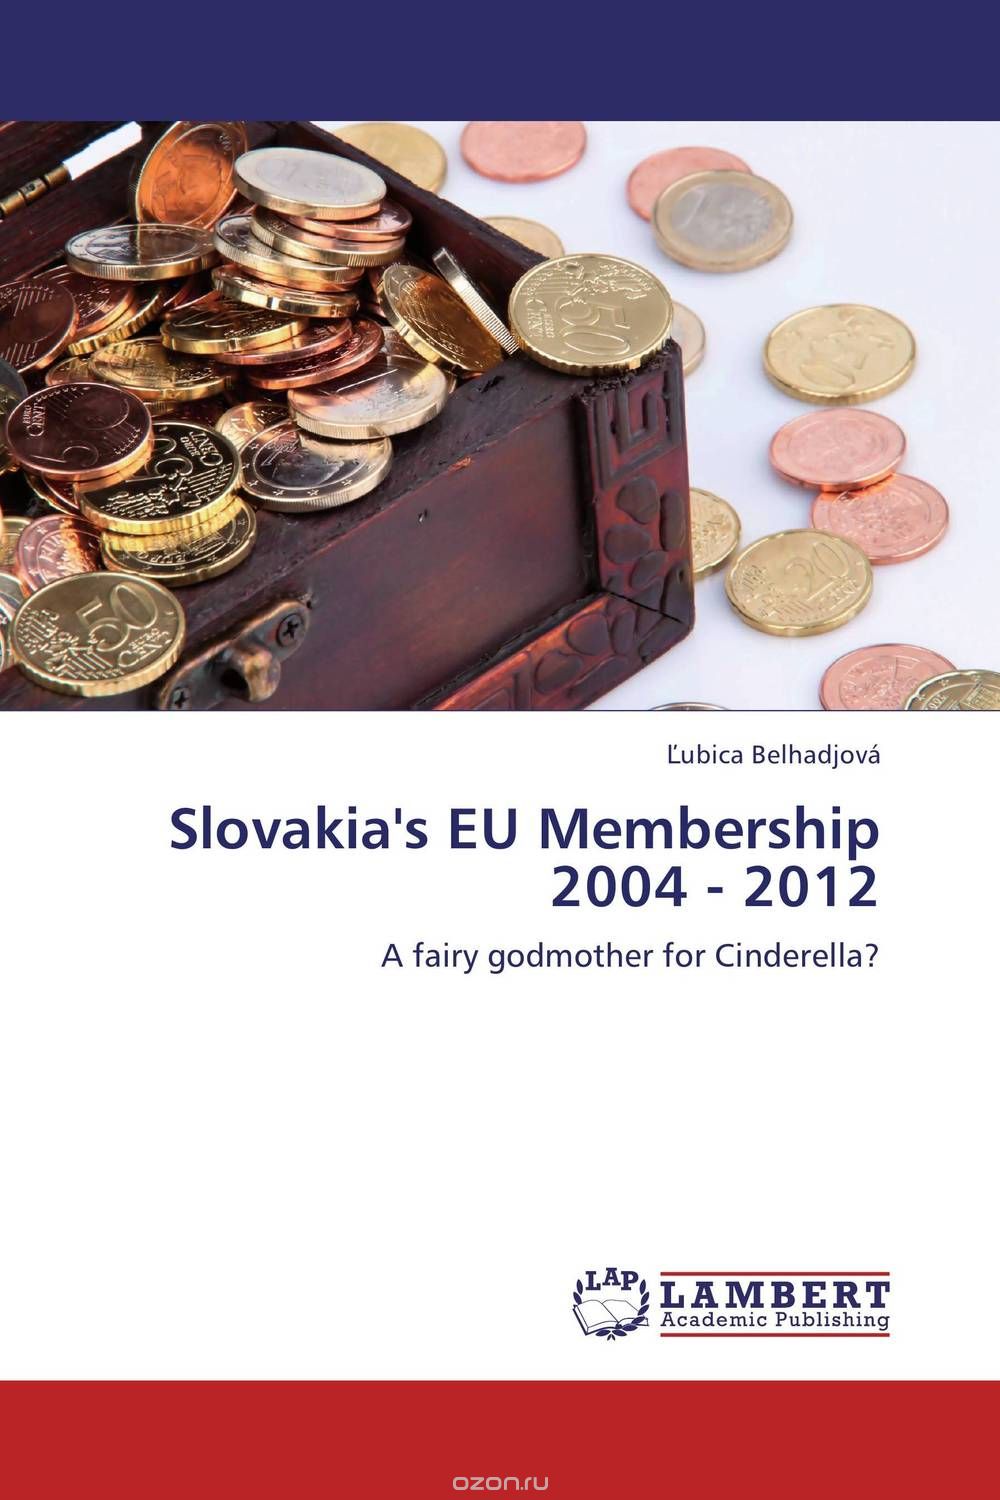 Скачать книгу "Slovakia's EU Membership  2004 - 2012"